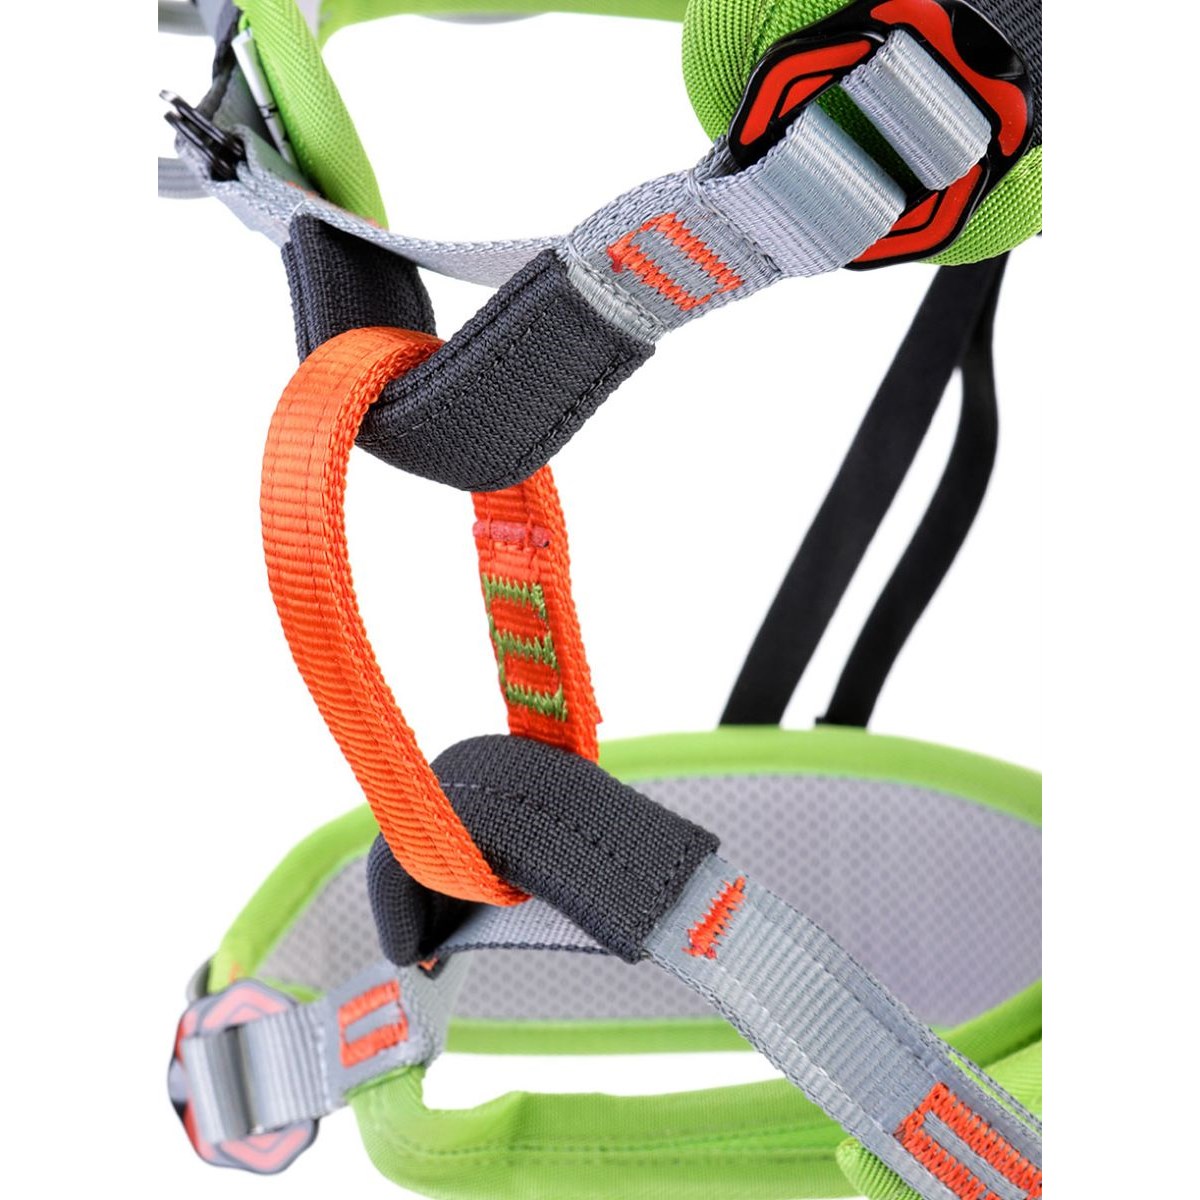 Sedací úvazek Climbing Technology Ascent Harness grey/green Climbing Technology 10025861 L-11